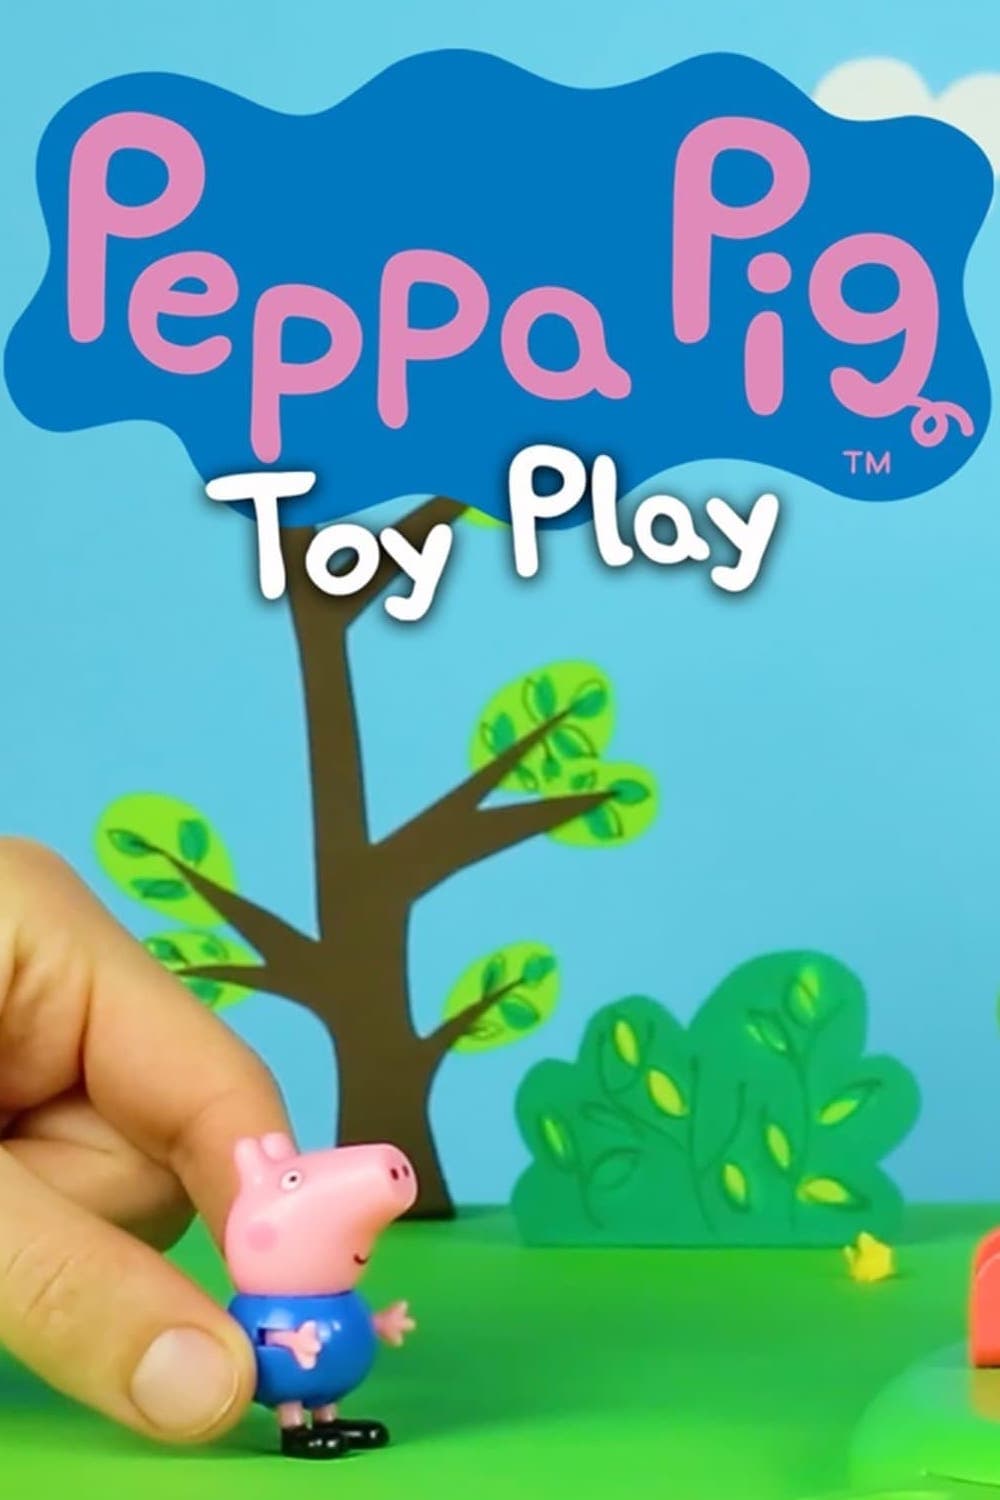 Peppa Pig - Toy Play